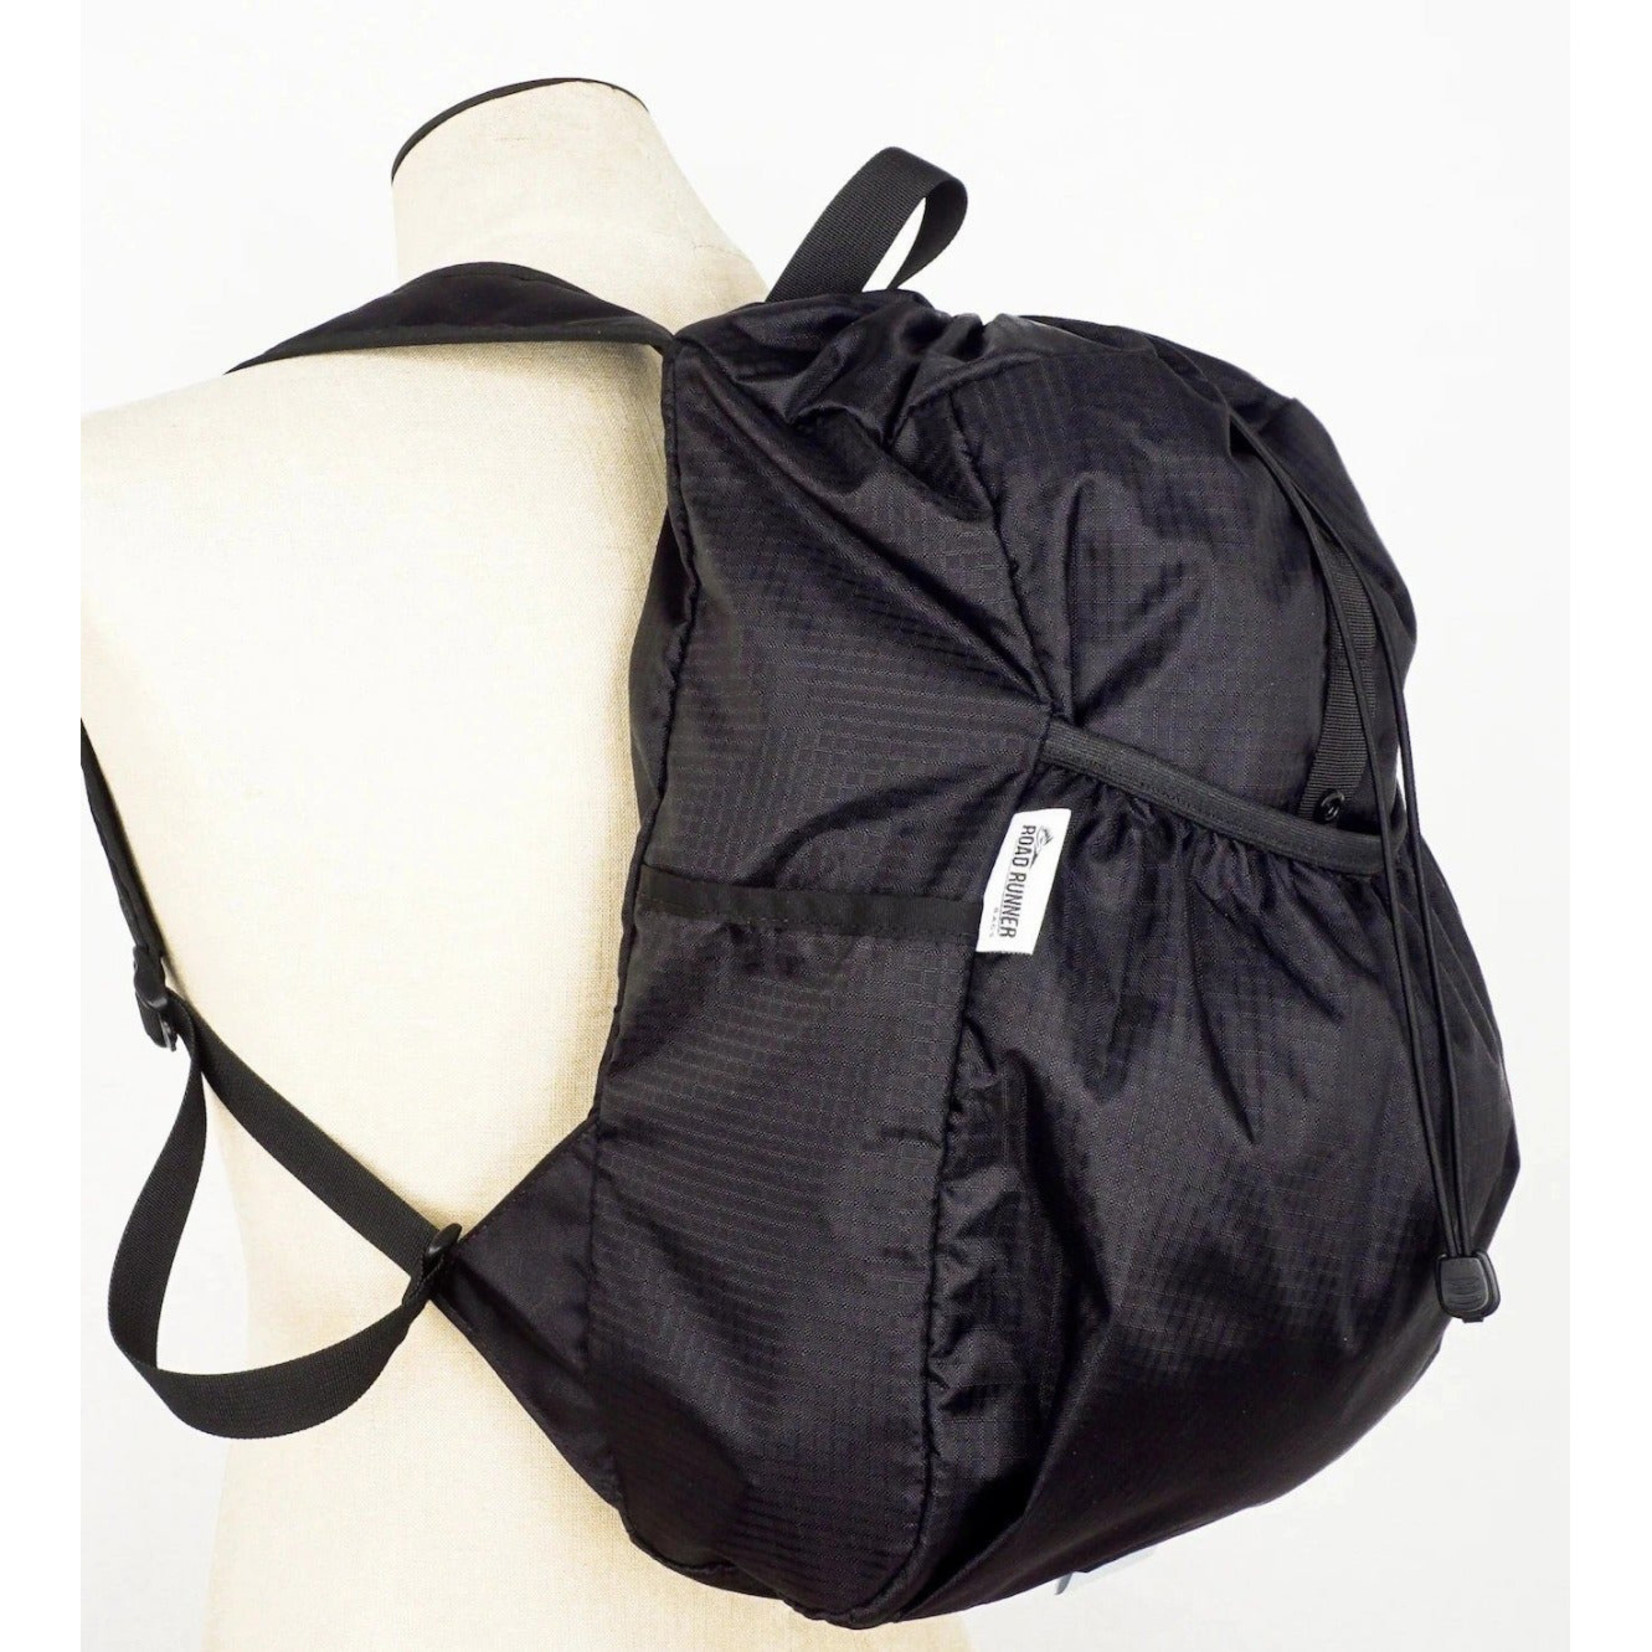 Road Runner Bags Road Runner Bags COMRAD Packable Lightweight Backpack